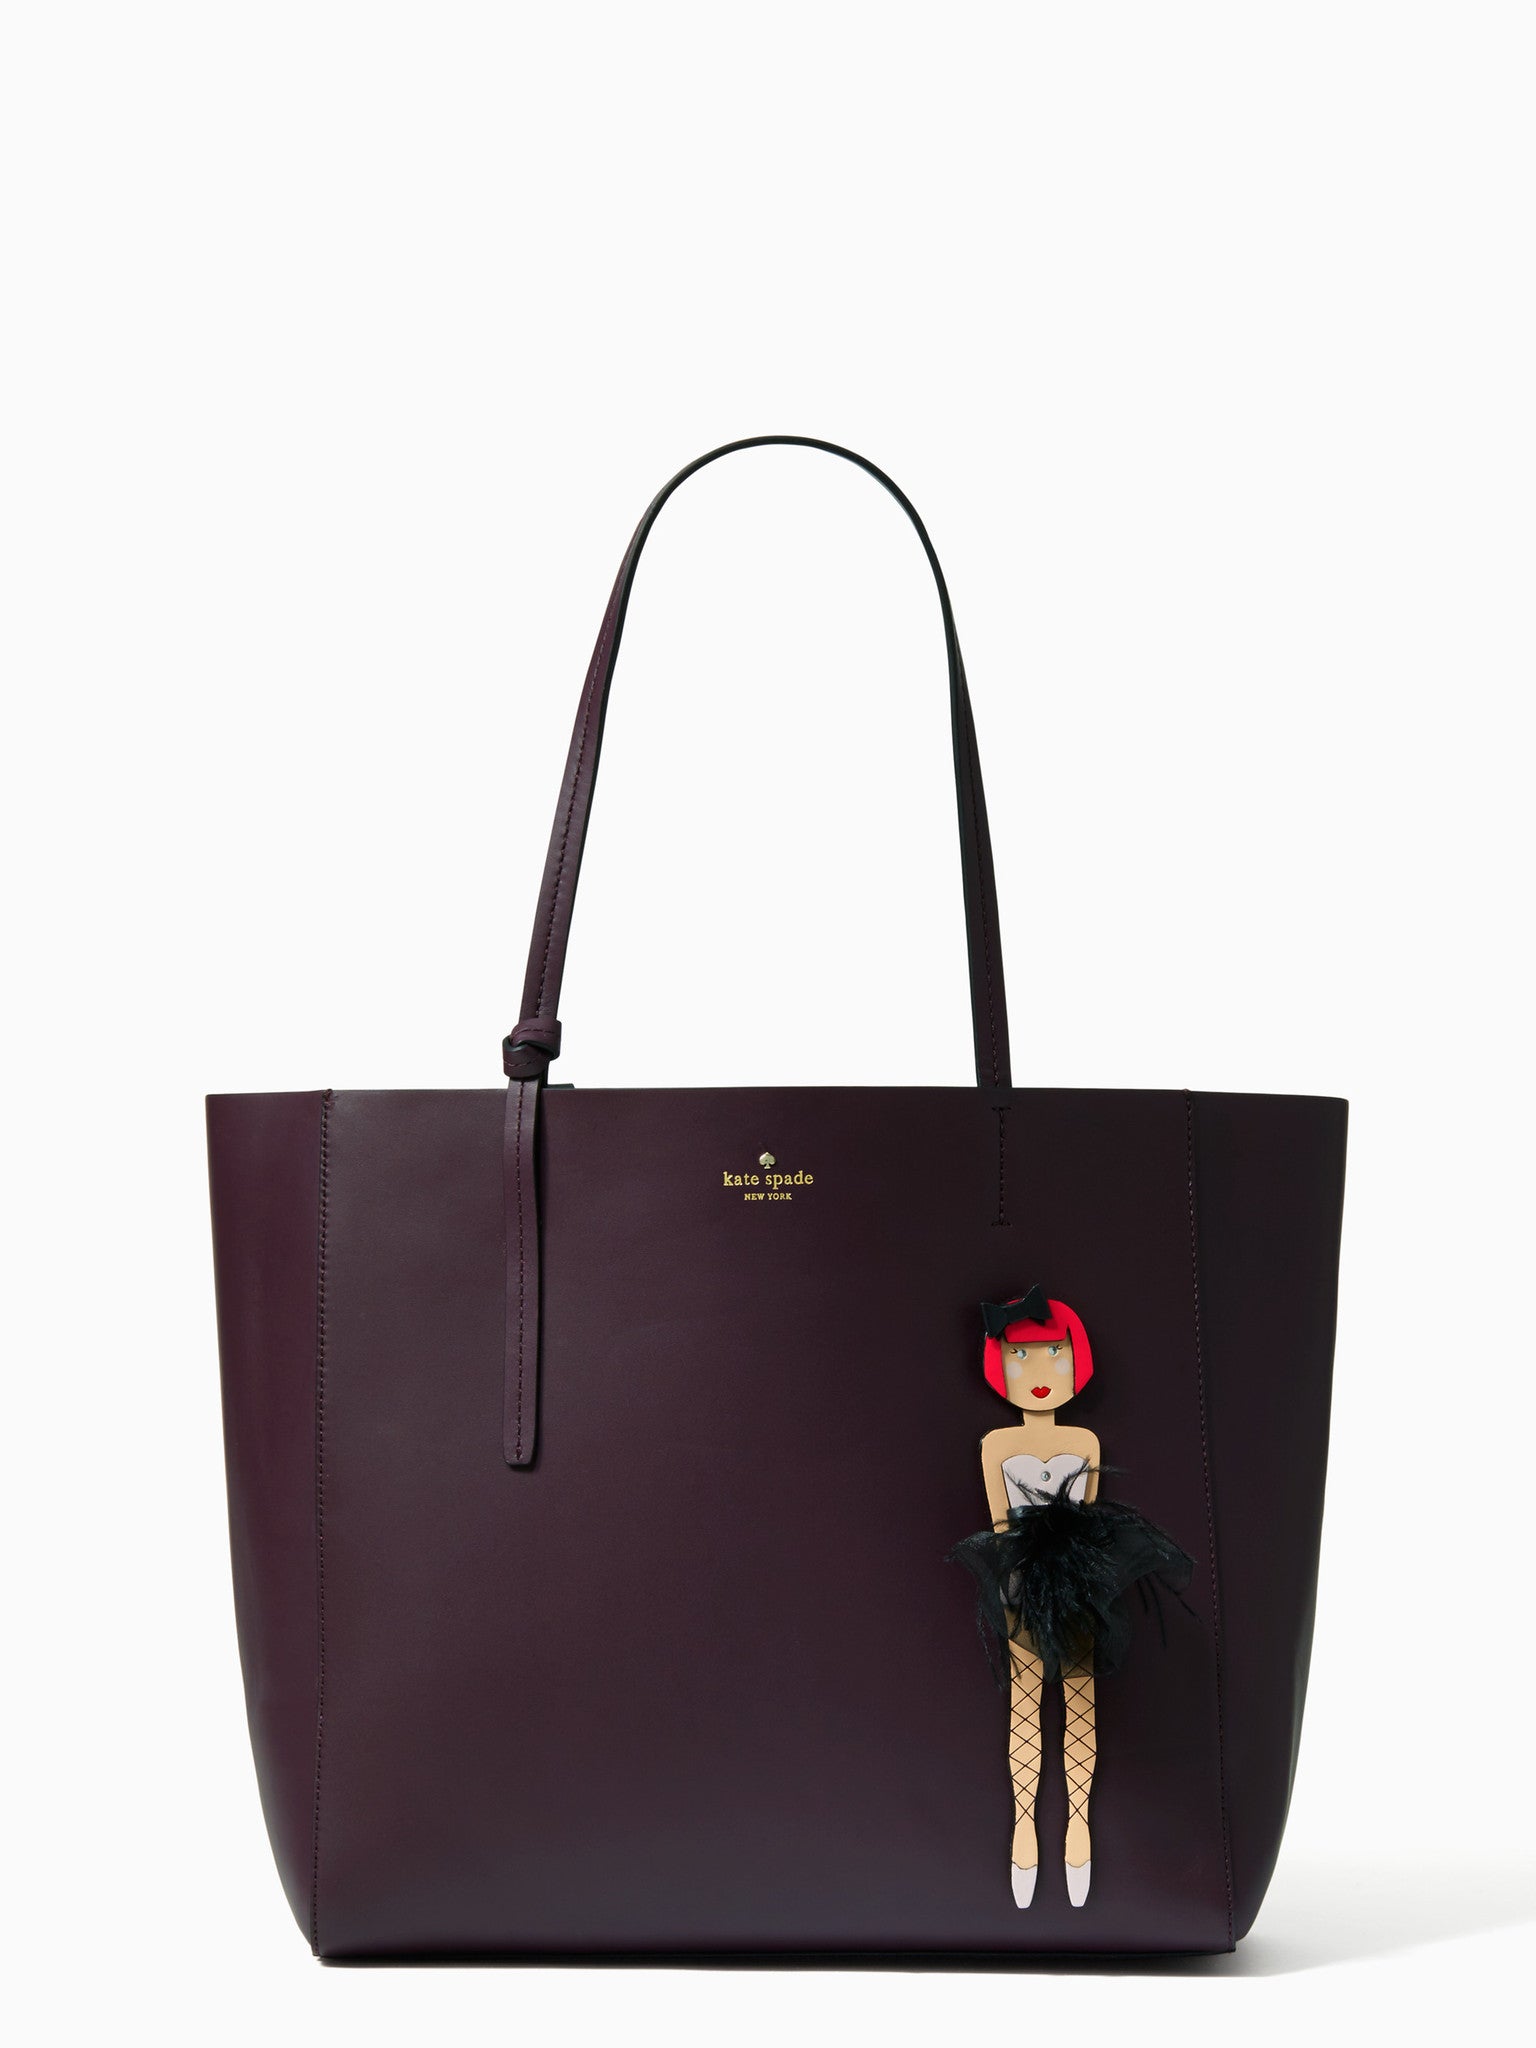 kate spade handbag for women Aster crossbody purse in leather, Warm ginger:  Handbags: Amazon.com